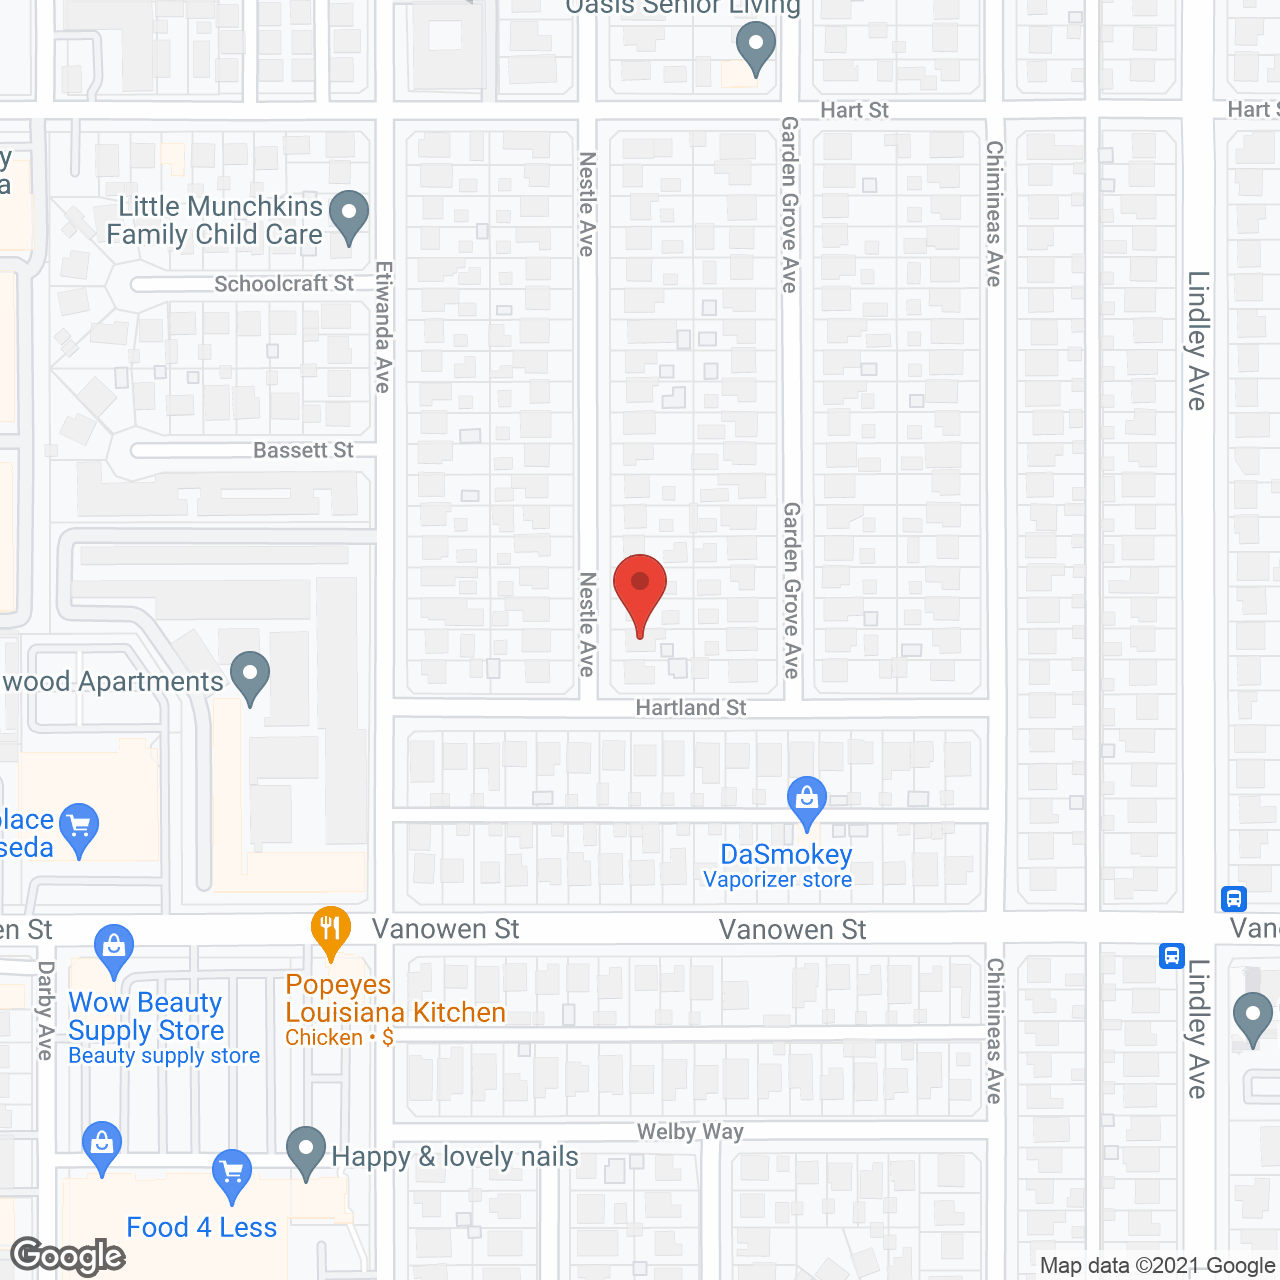 Nestle Place Senior Care in google map